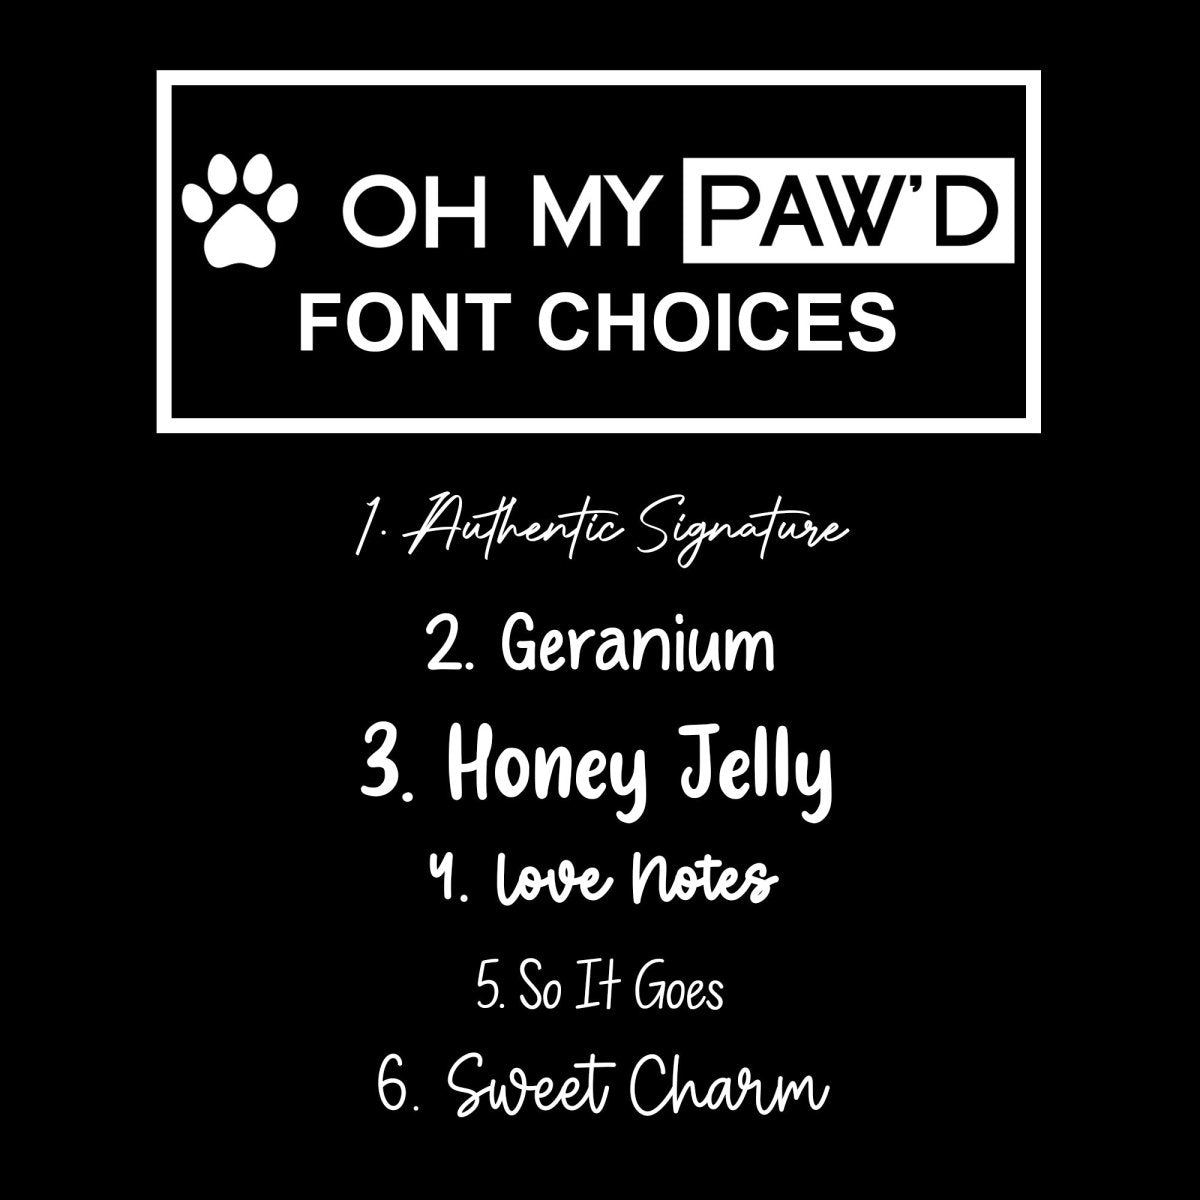 Custom Cat Photo Coasters - Oh My Paw'd